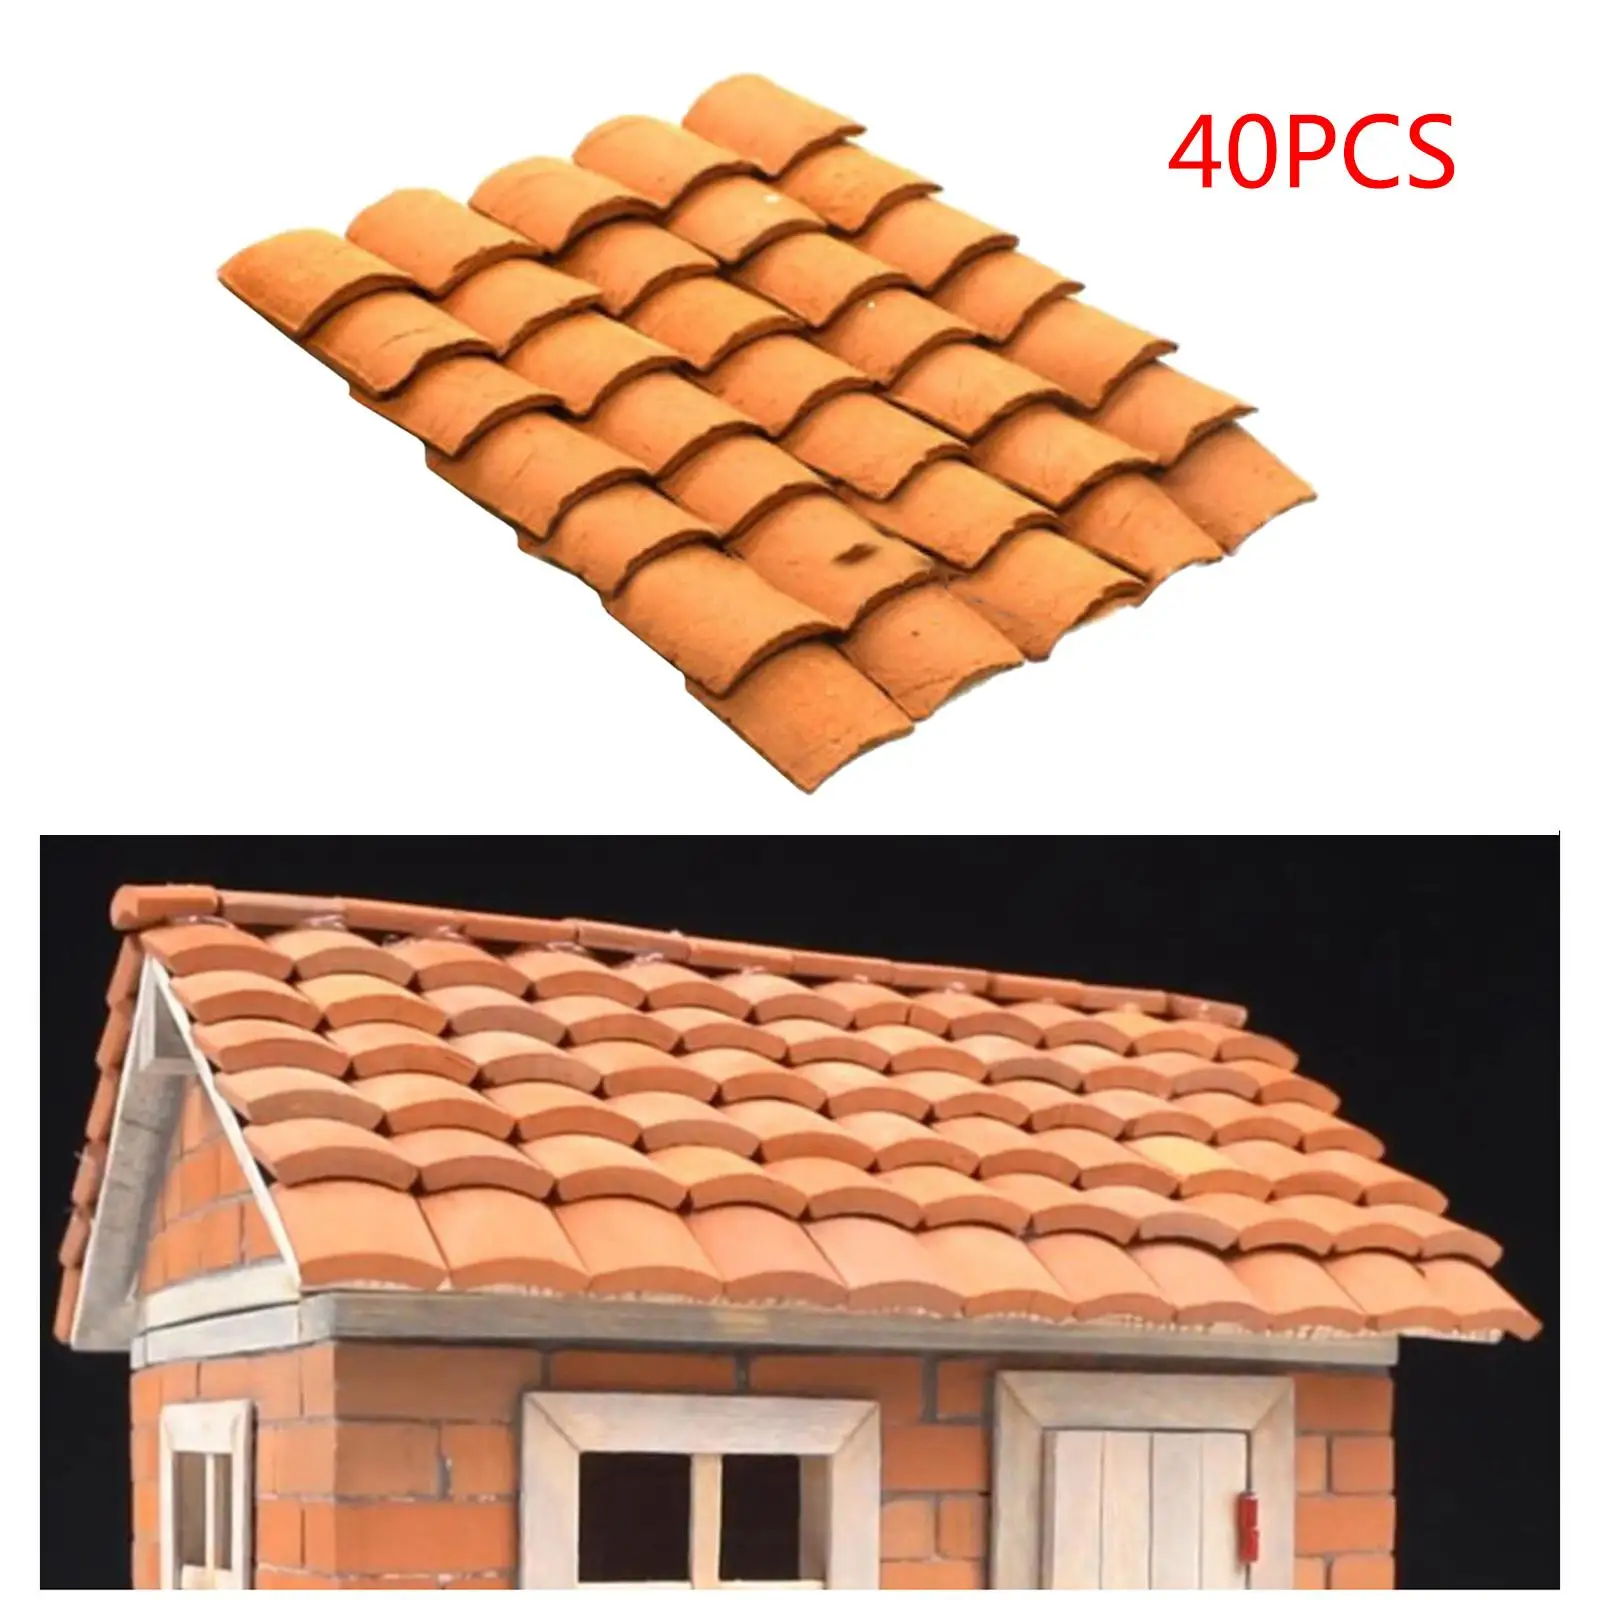 40 Pieces Miniature Diorama Bricks,House Roof Mold Building Scene,12x10mm,Sand